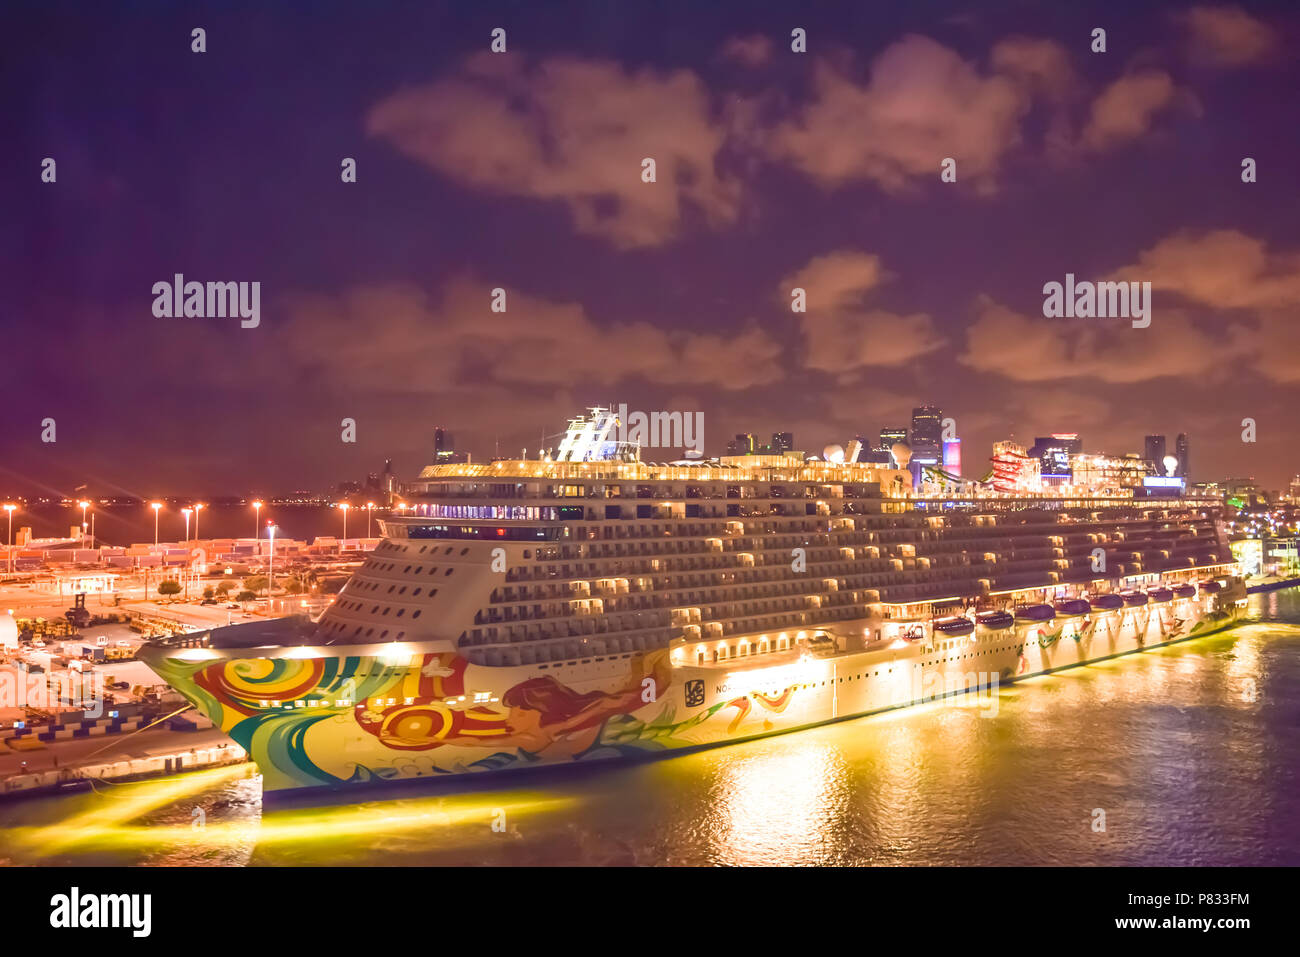 Miami, Florida - April 4 2014: Norwegian Getaway Cruise Ship at sunrise in the Port of Miami. Stock Photo